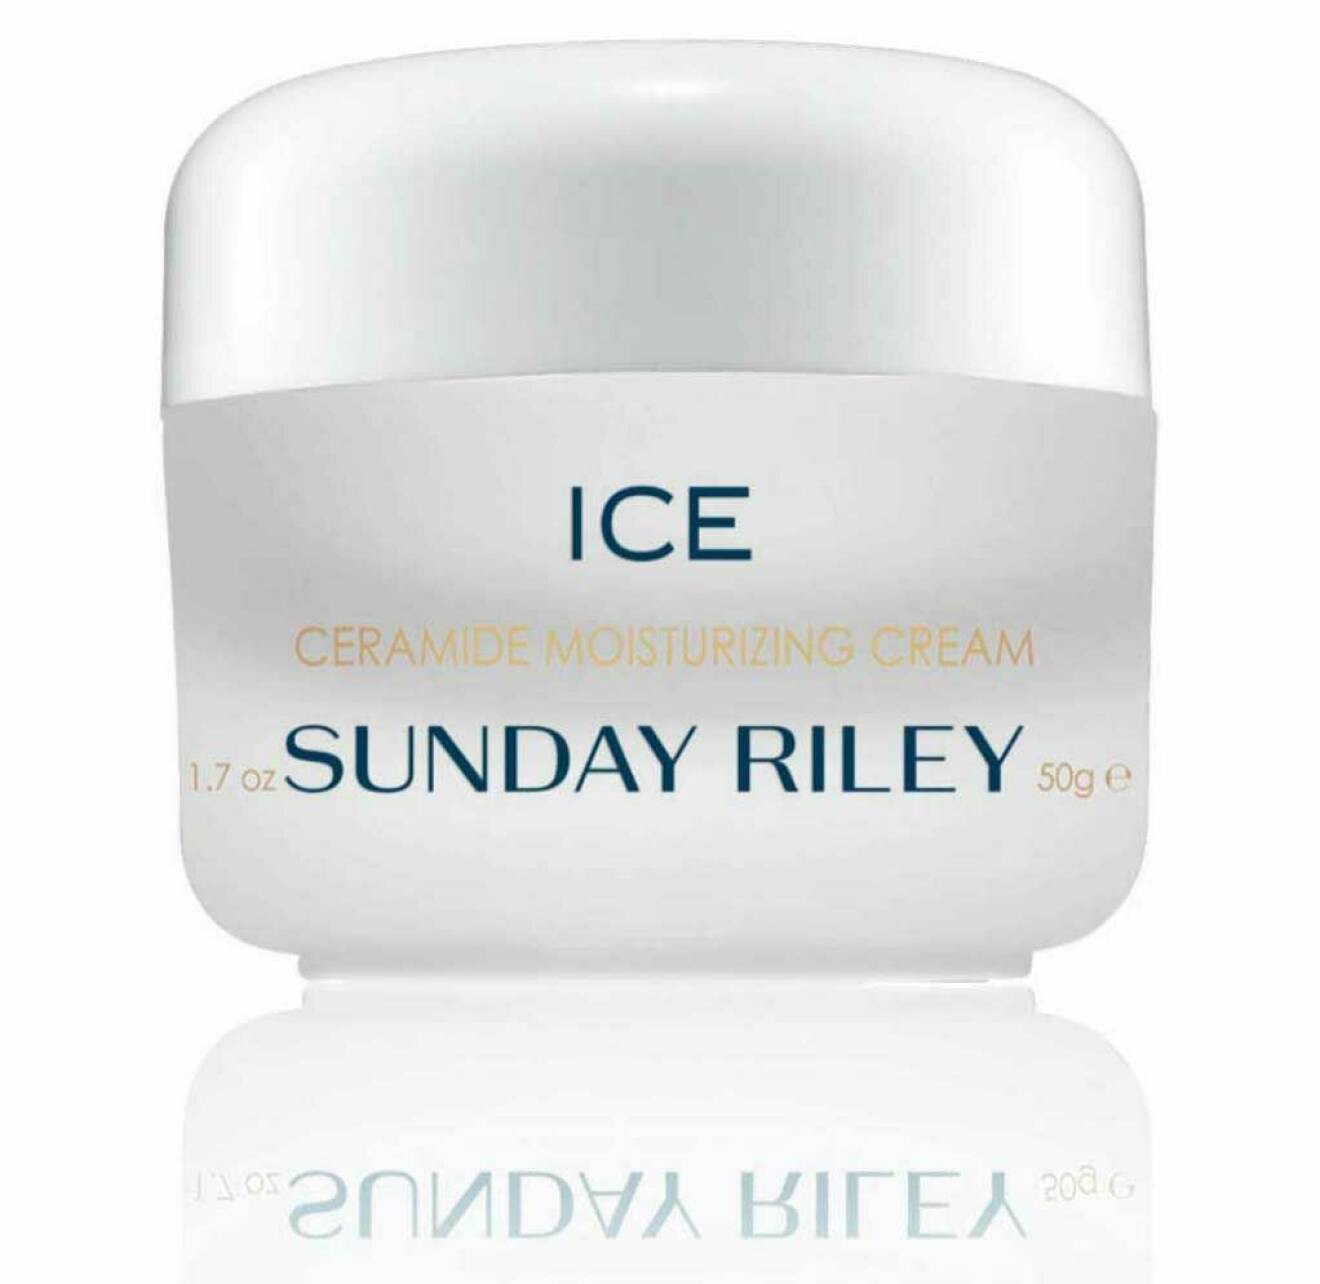 ICE Ceramide Moistu­rizing Cream från Sunday Riley.